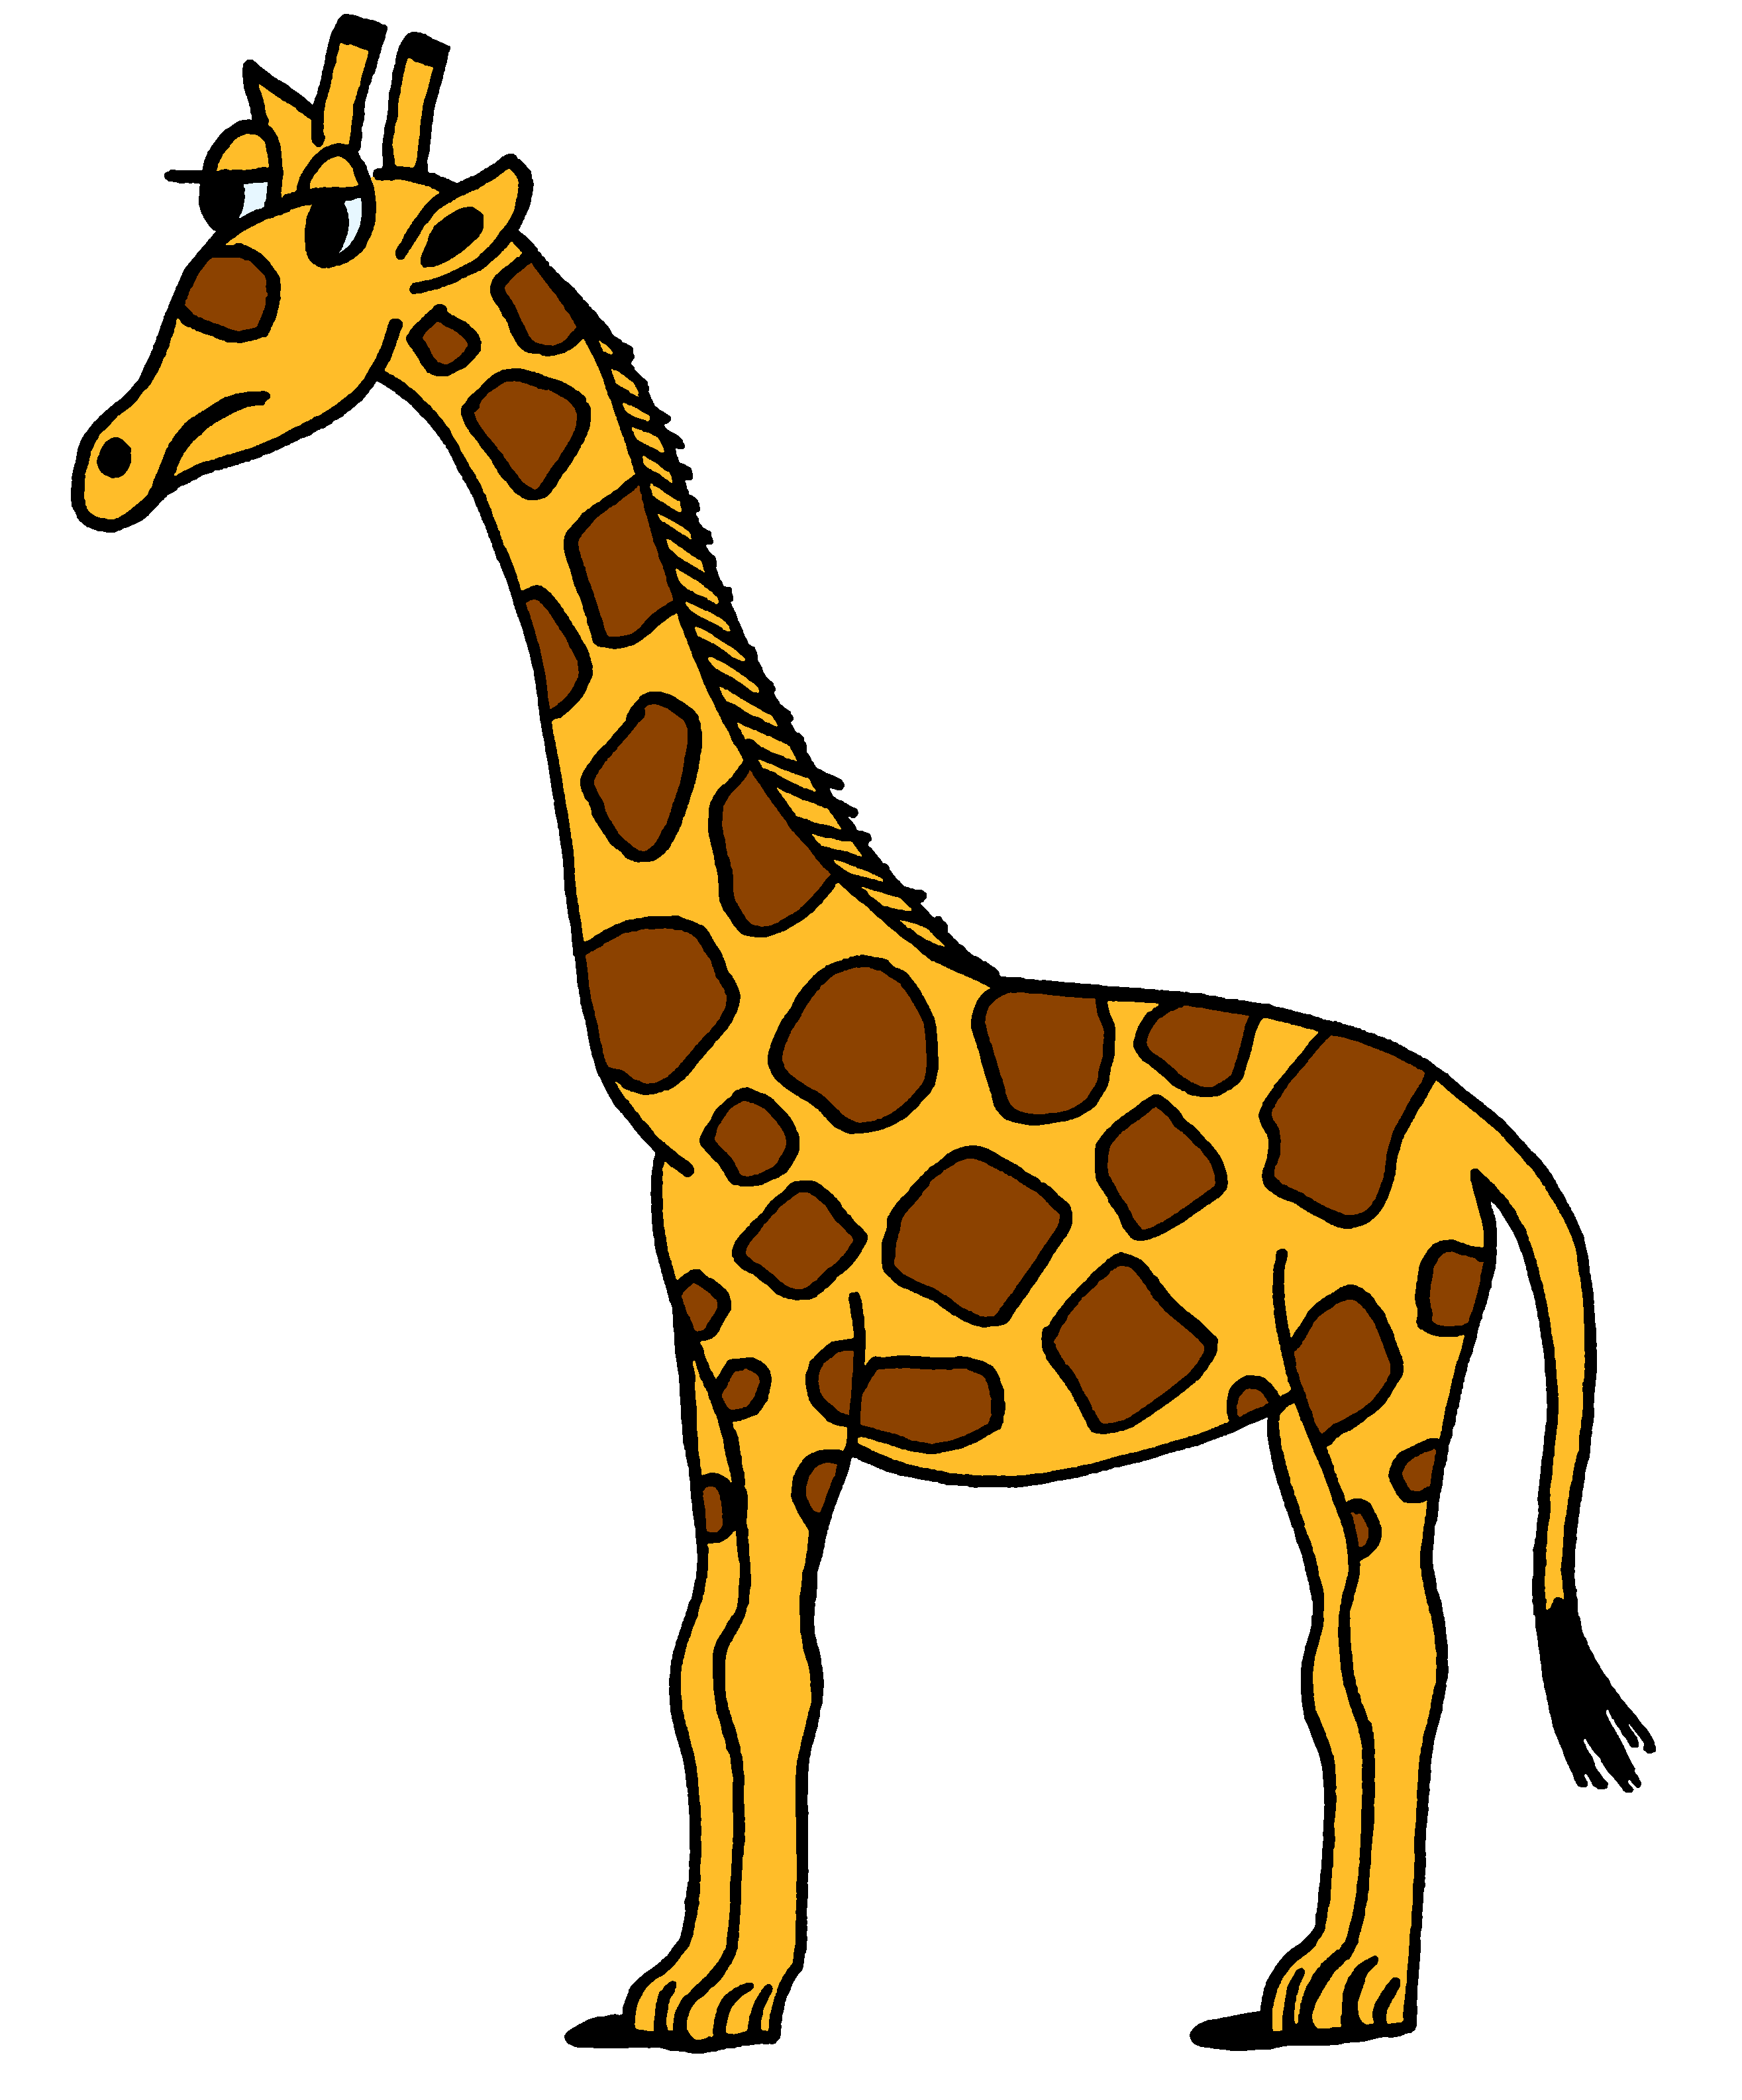 Giraffe clipart #2, Download drawings